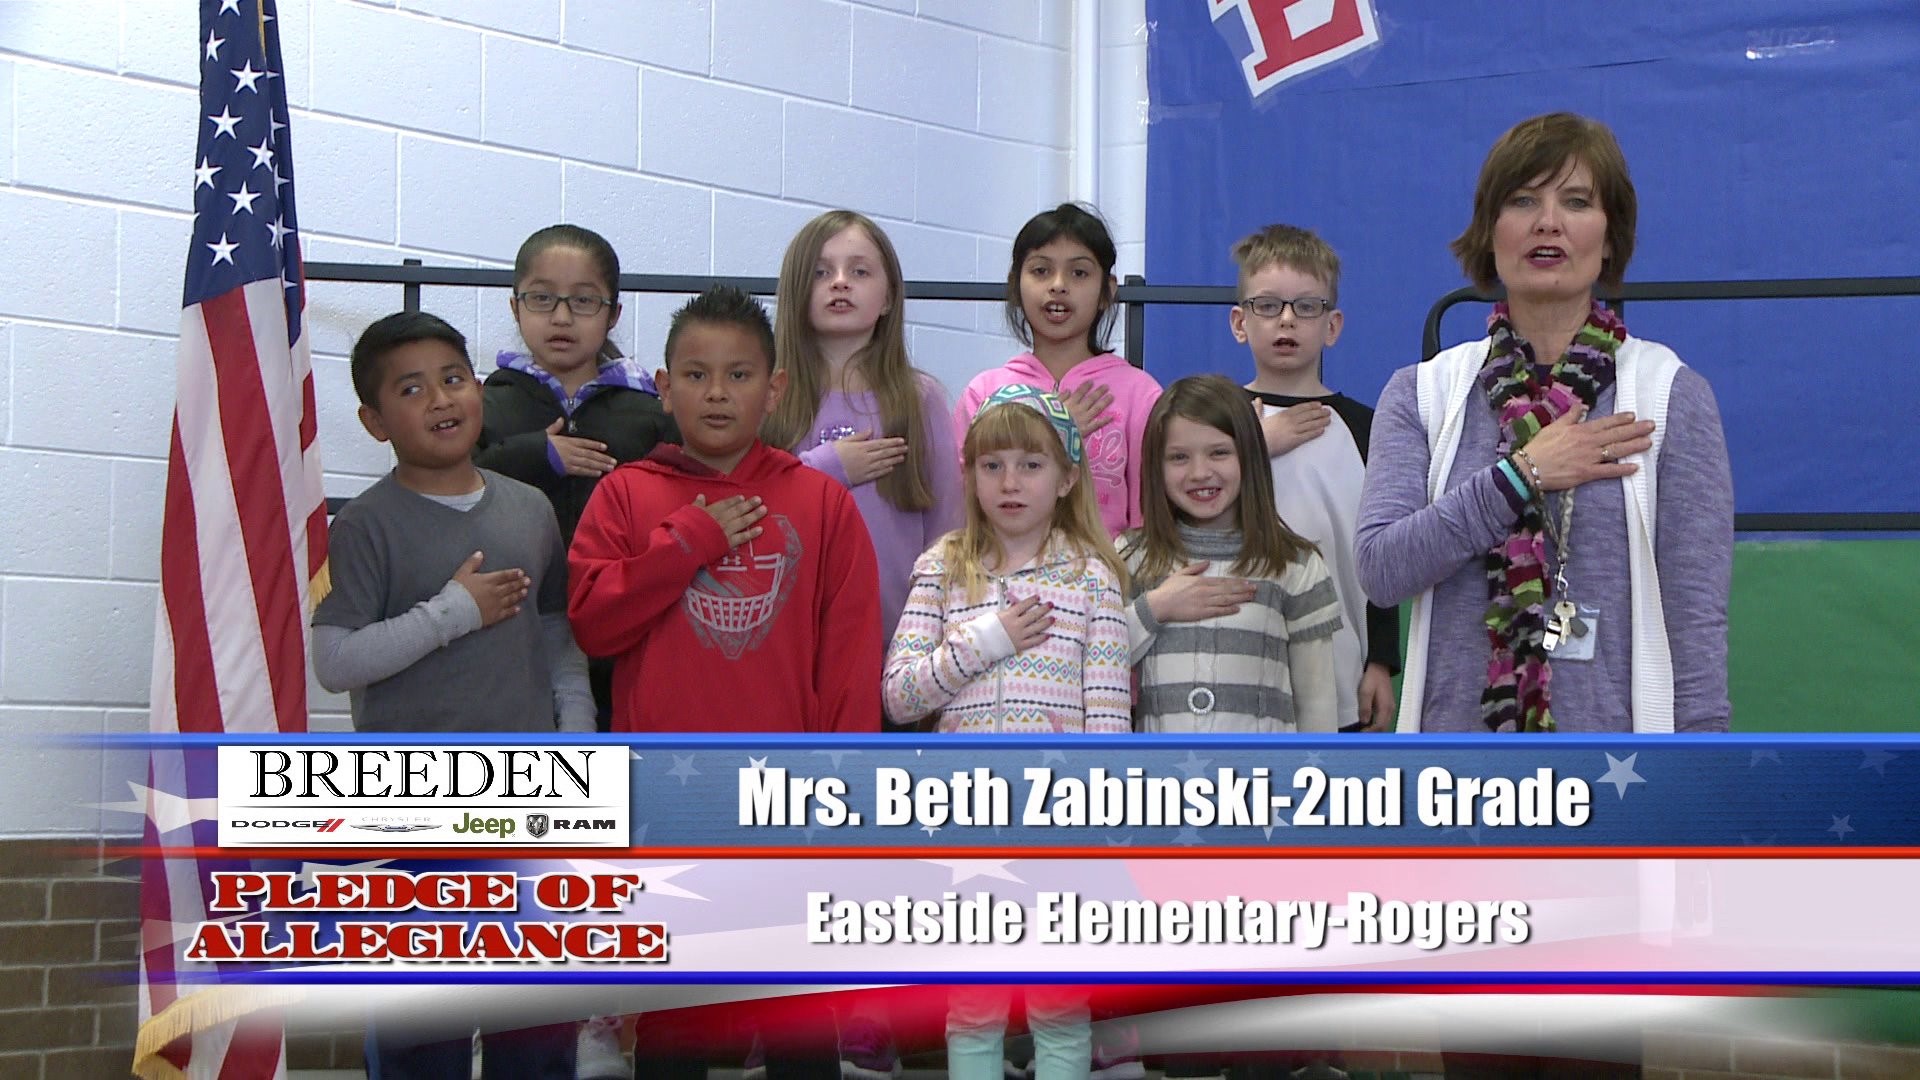 Mrs. Beth Zabinski - 2nd Grade  Eastside Elementary  Rogers